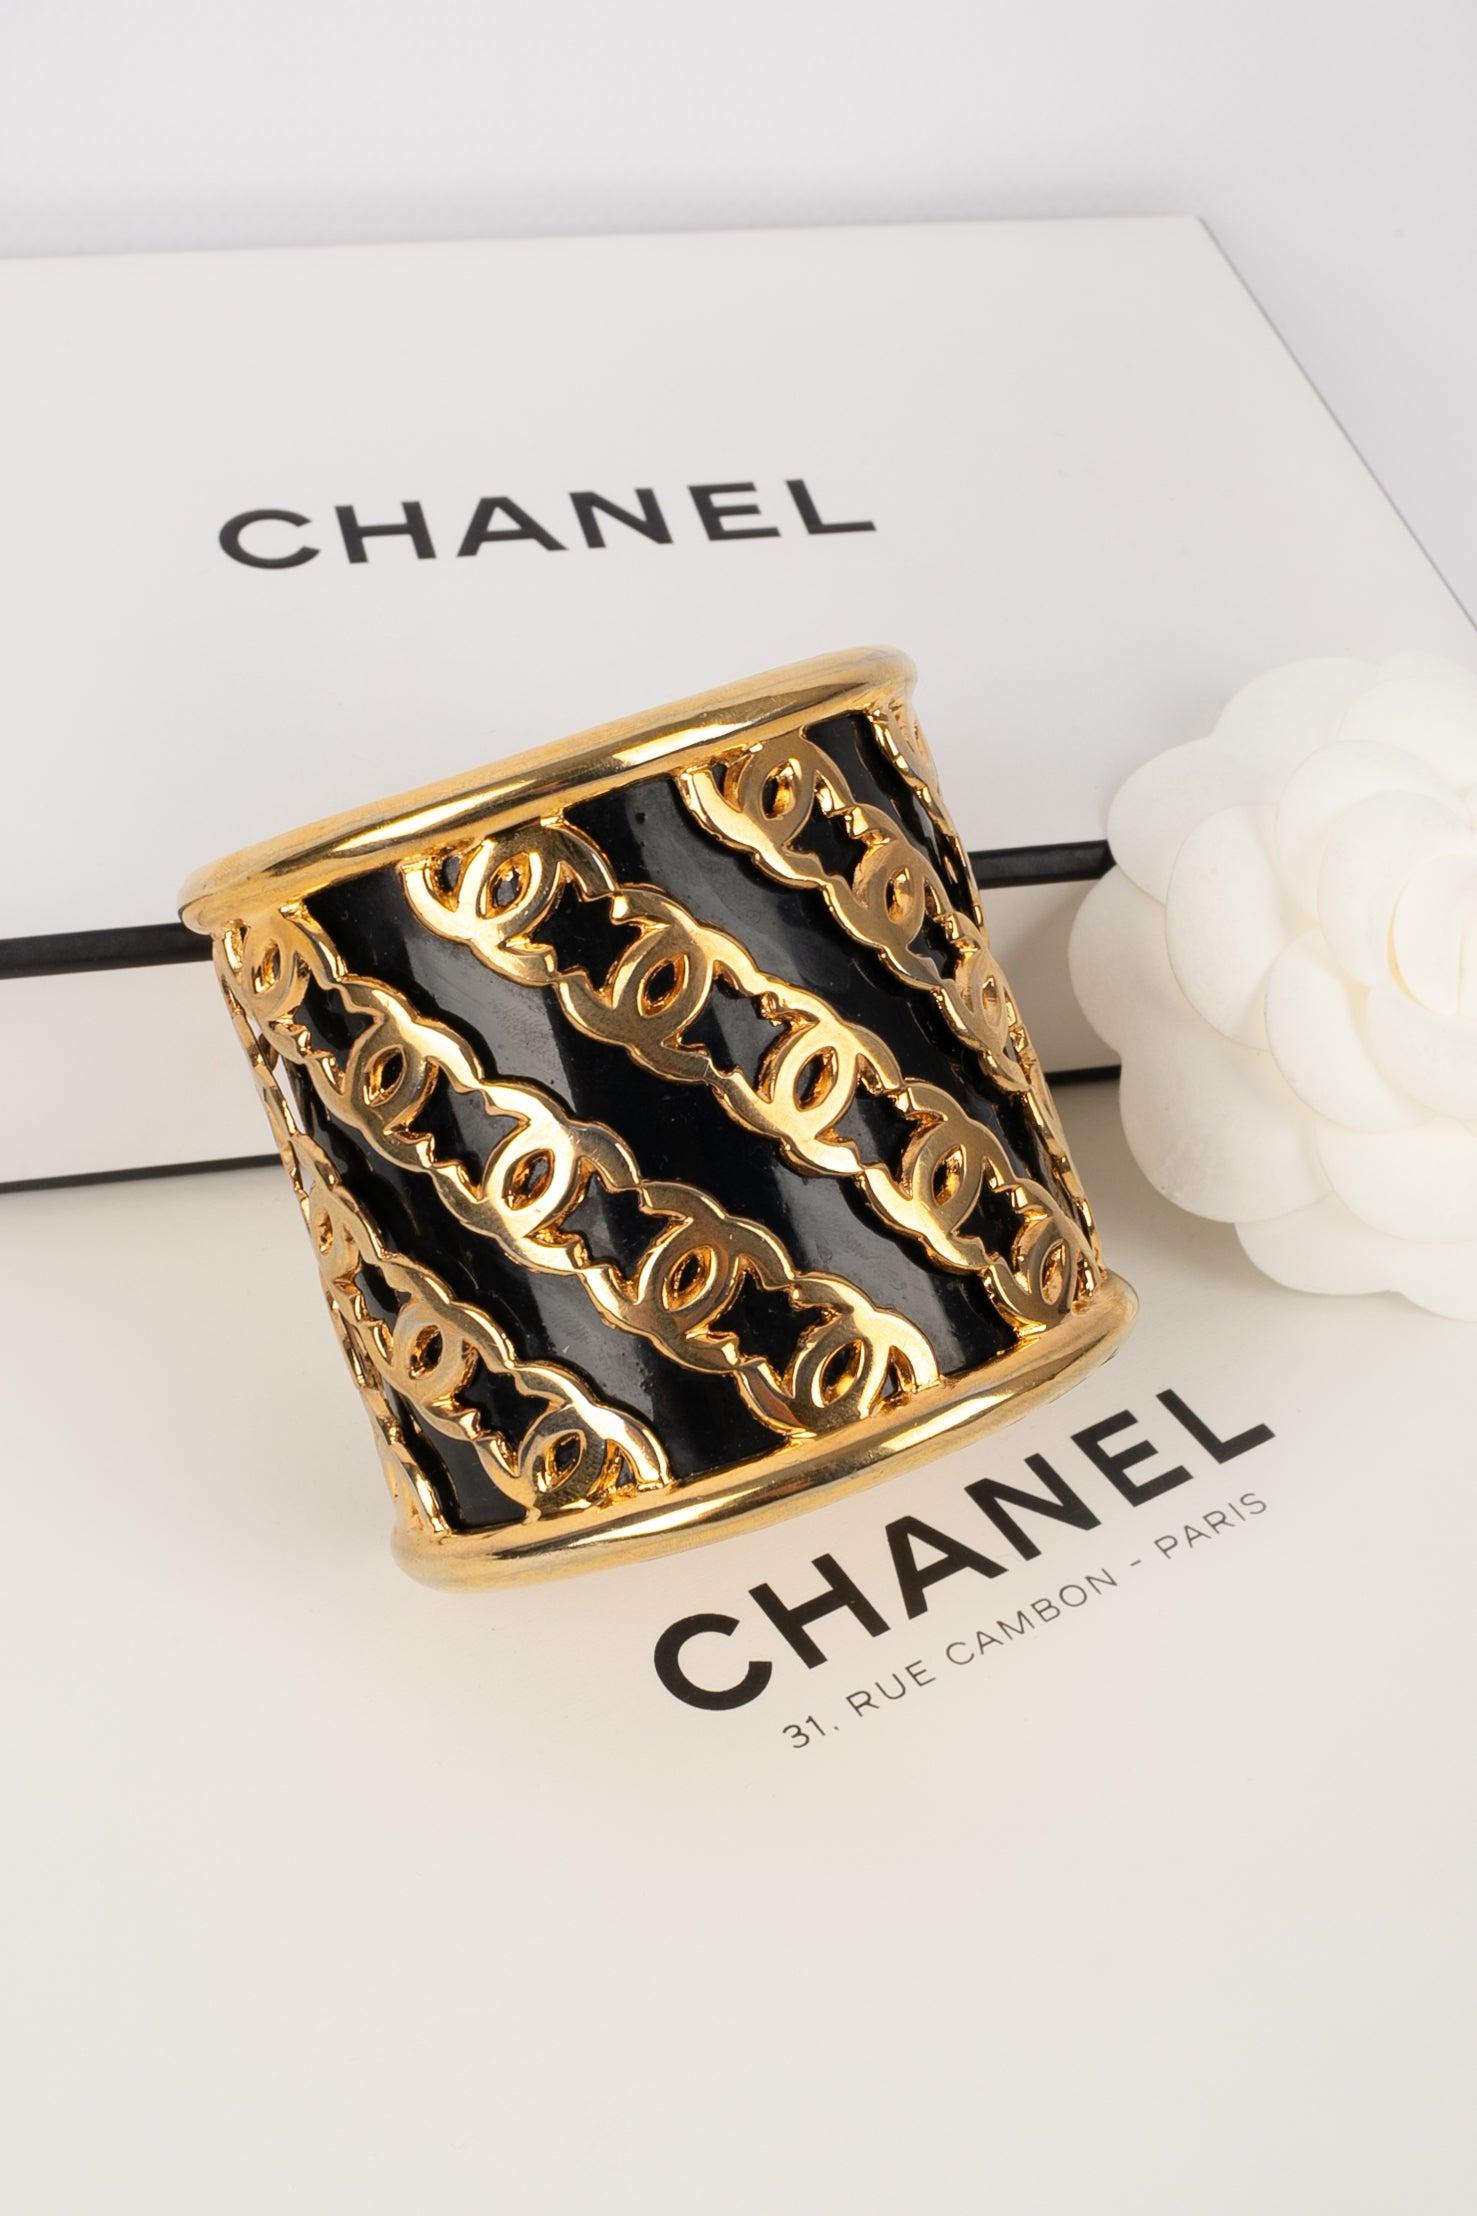 Chanel Golden Metal Cuff Bracelet Enameled with Black For Sale 4